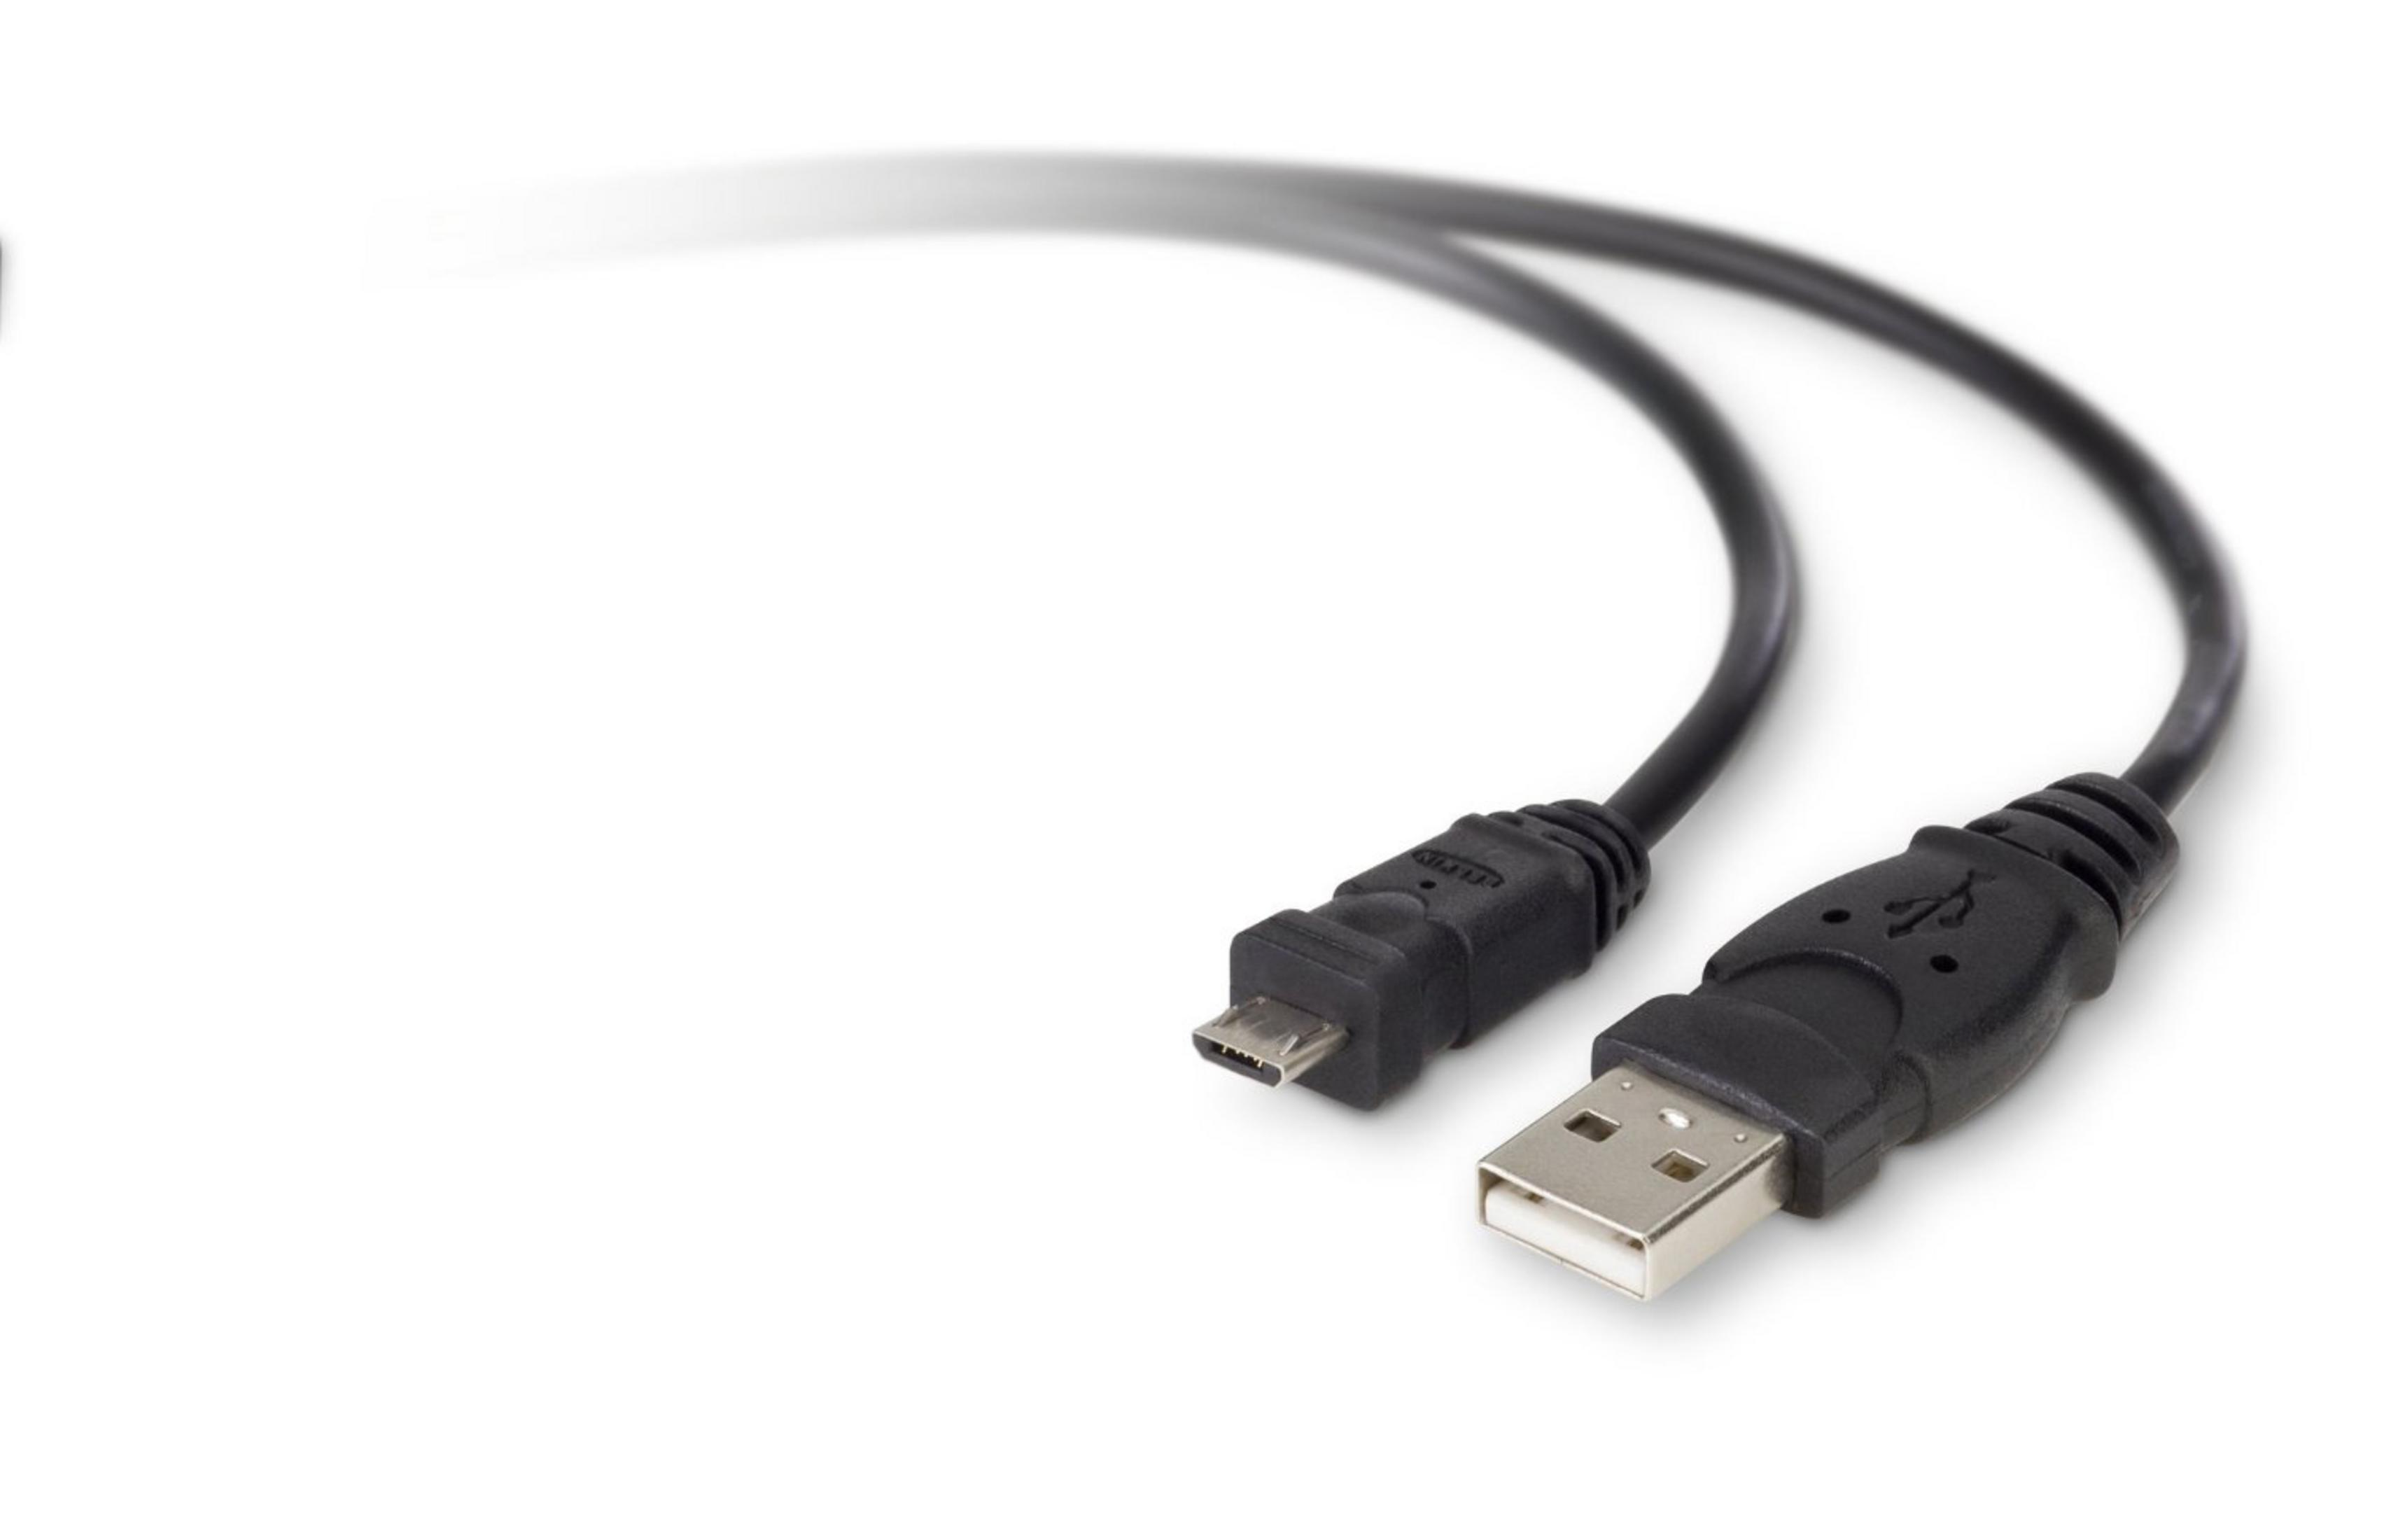 0,9M Verbindungskabel USB-A BELKIN KABEL F3U151CP0.9M-P PRO MICRO-B